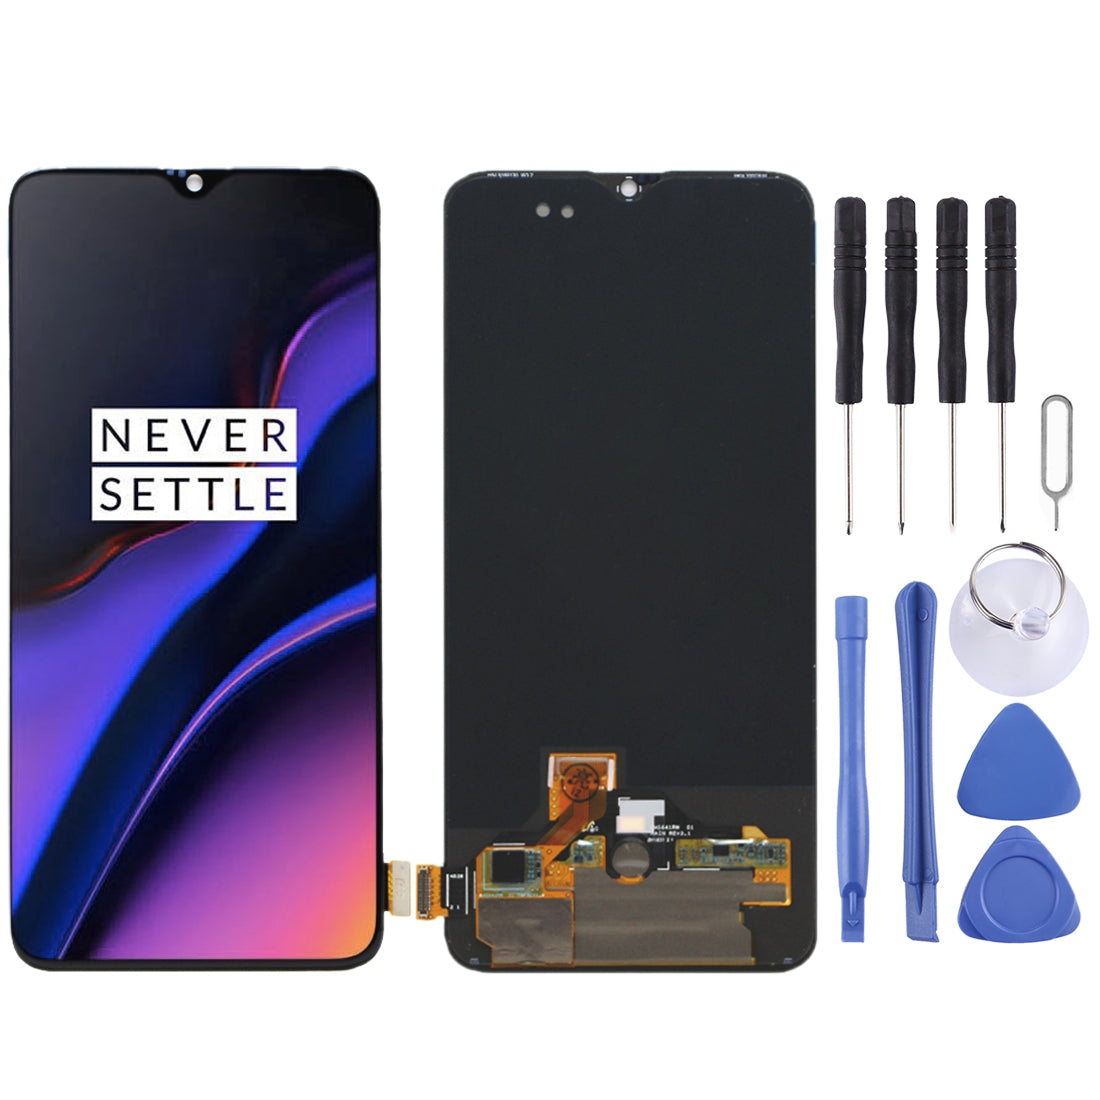 Pantalla LCD + Tactil Digitalizador OnePlus 6T Negro